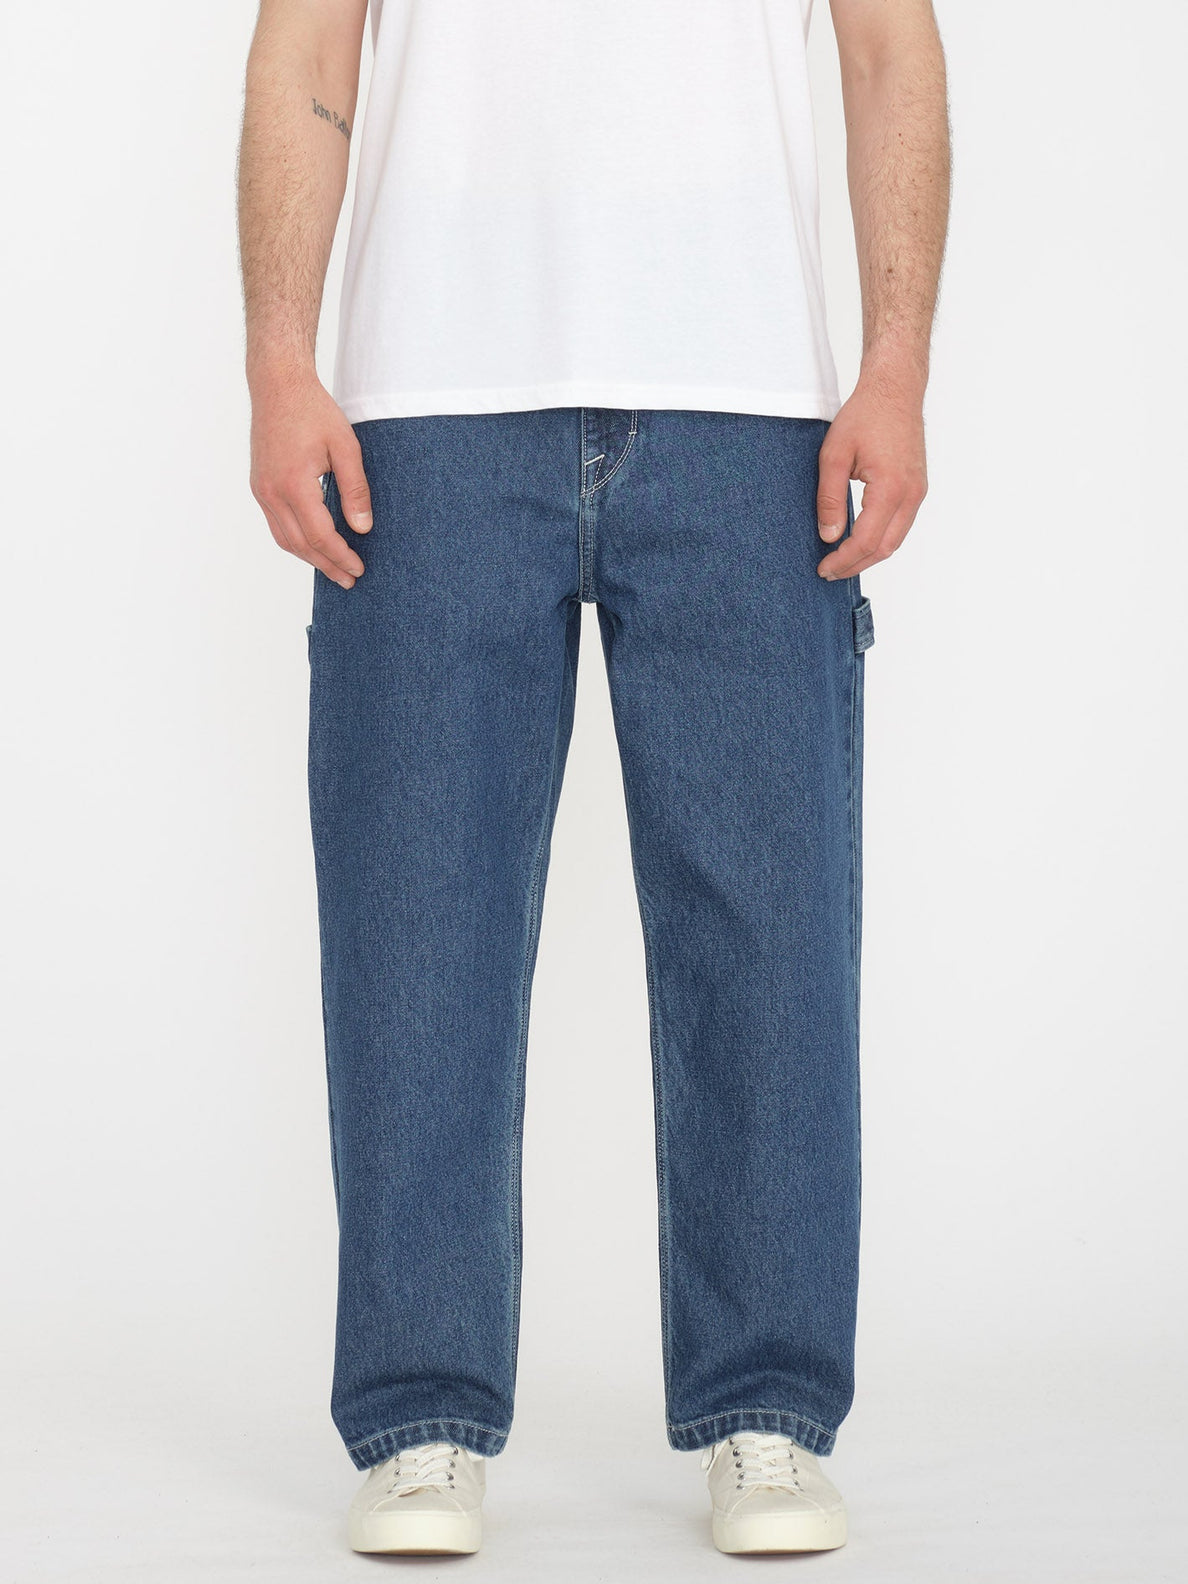 Kraftsman Jeans - INDIGO RIGID WASH